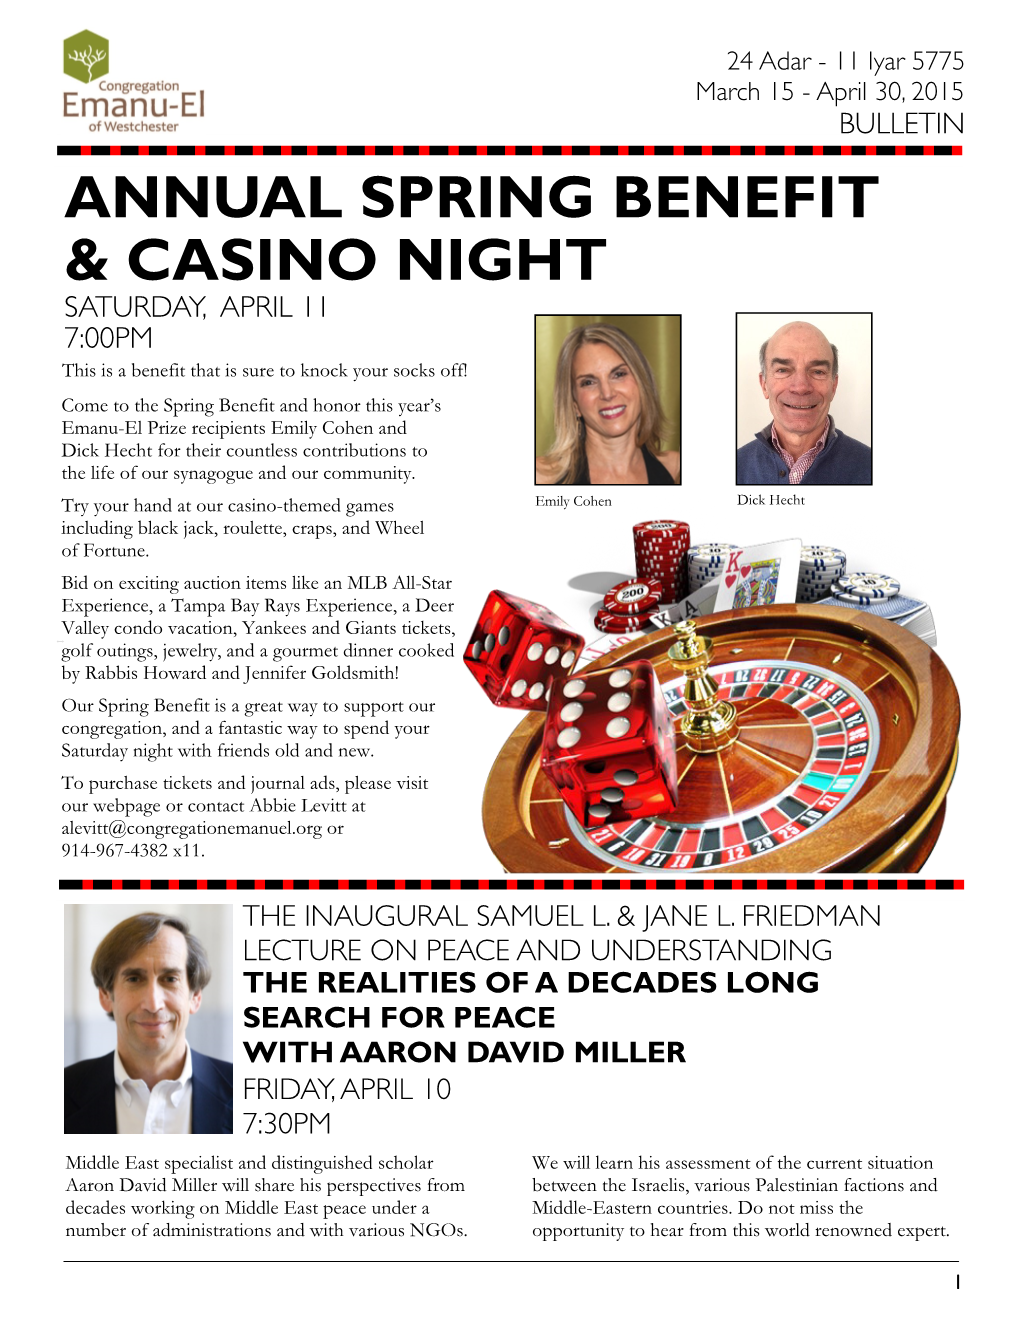 Annual Spring Benefit & Casino Night